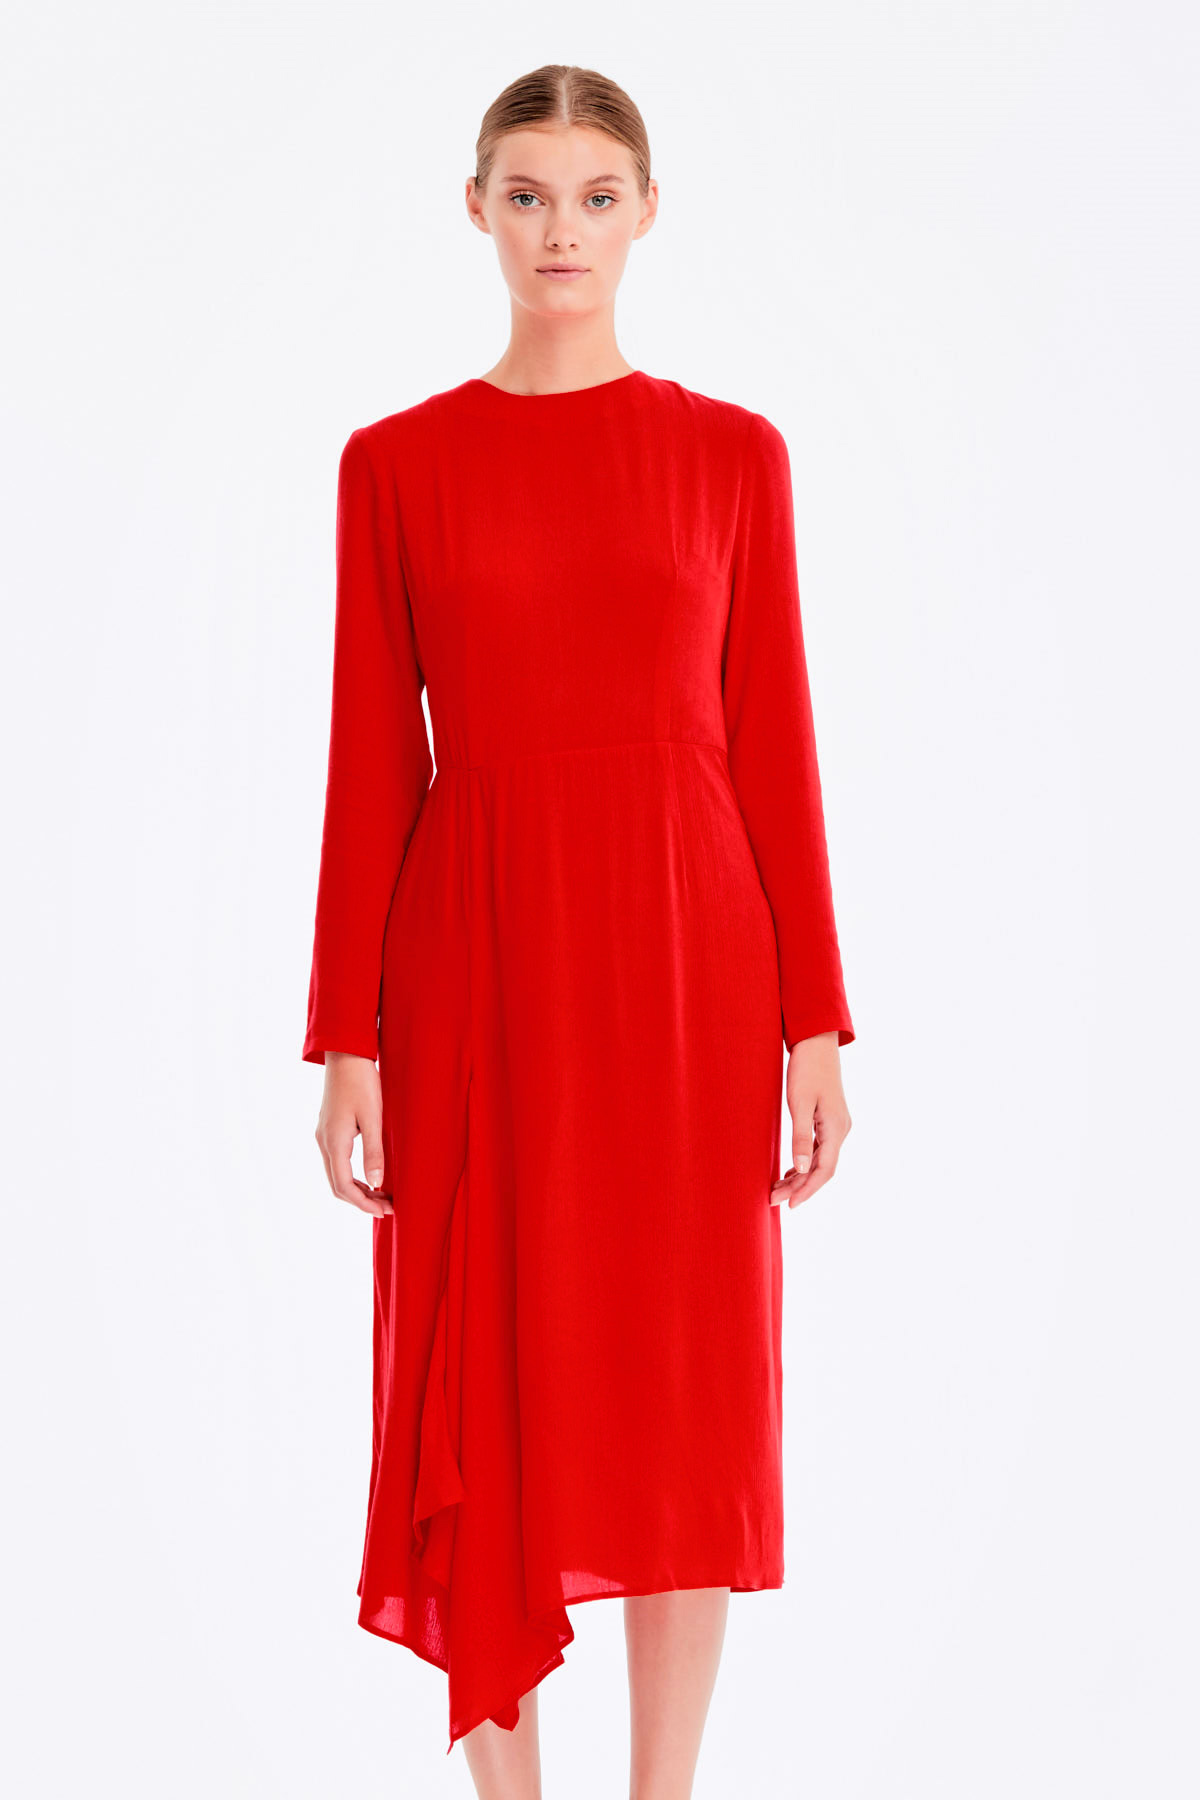 Midi red dress , photo 2